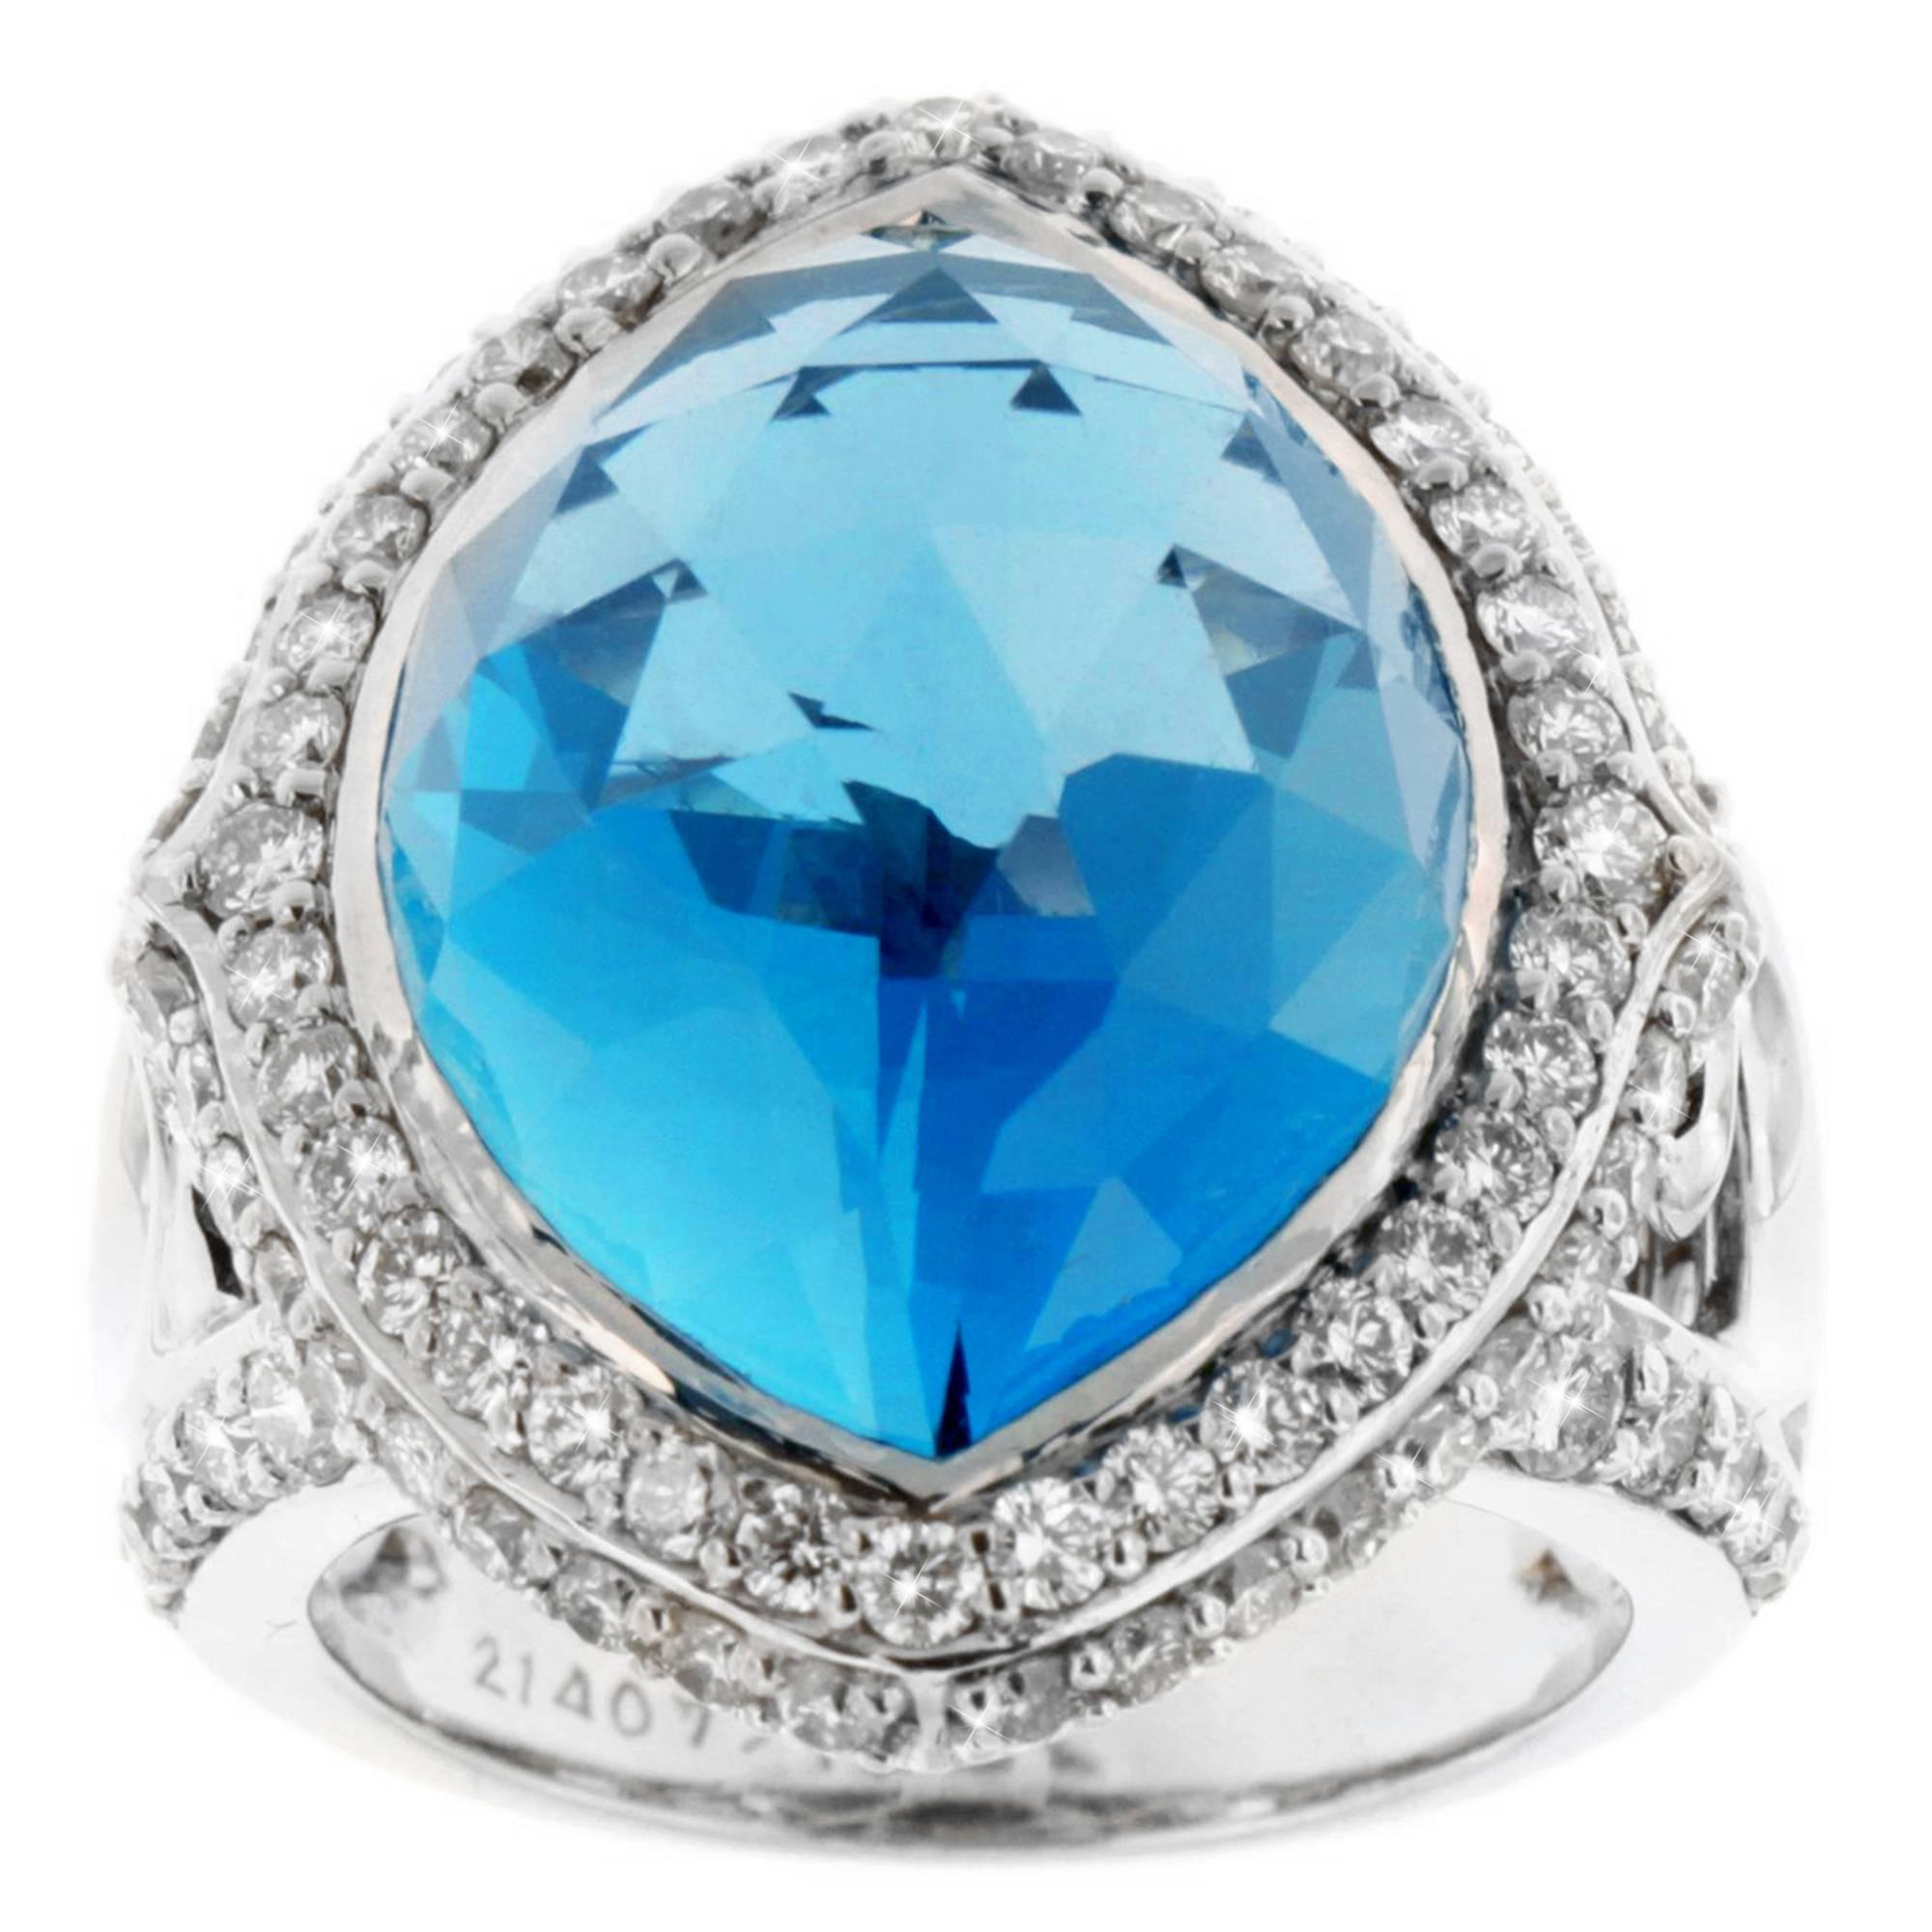 Zorab Creation 22.90 Carat London Blue Topaz Diamond Cocktail Ring For Sale